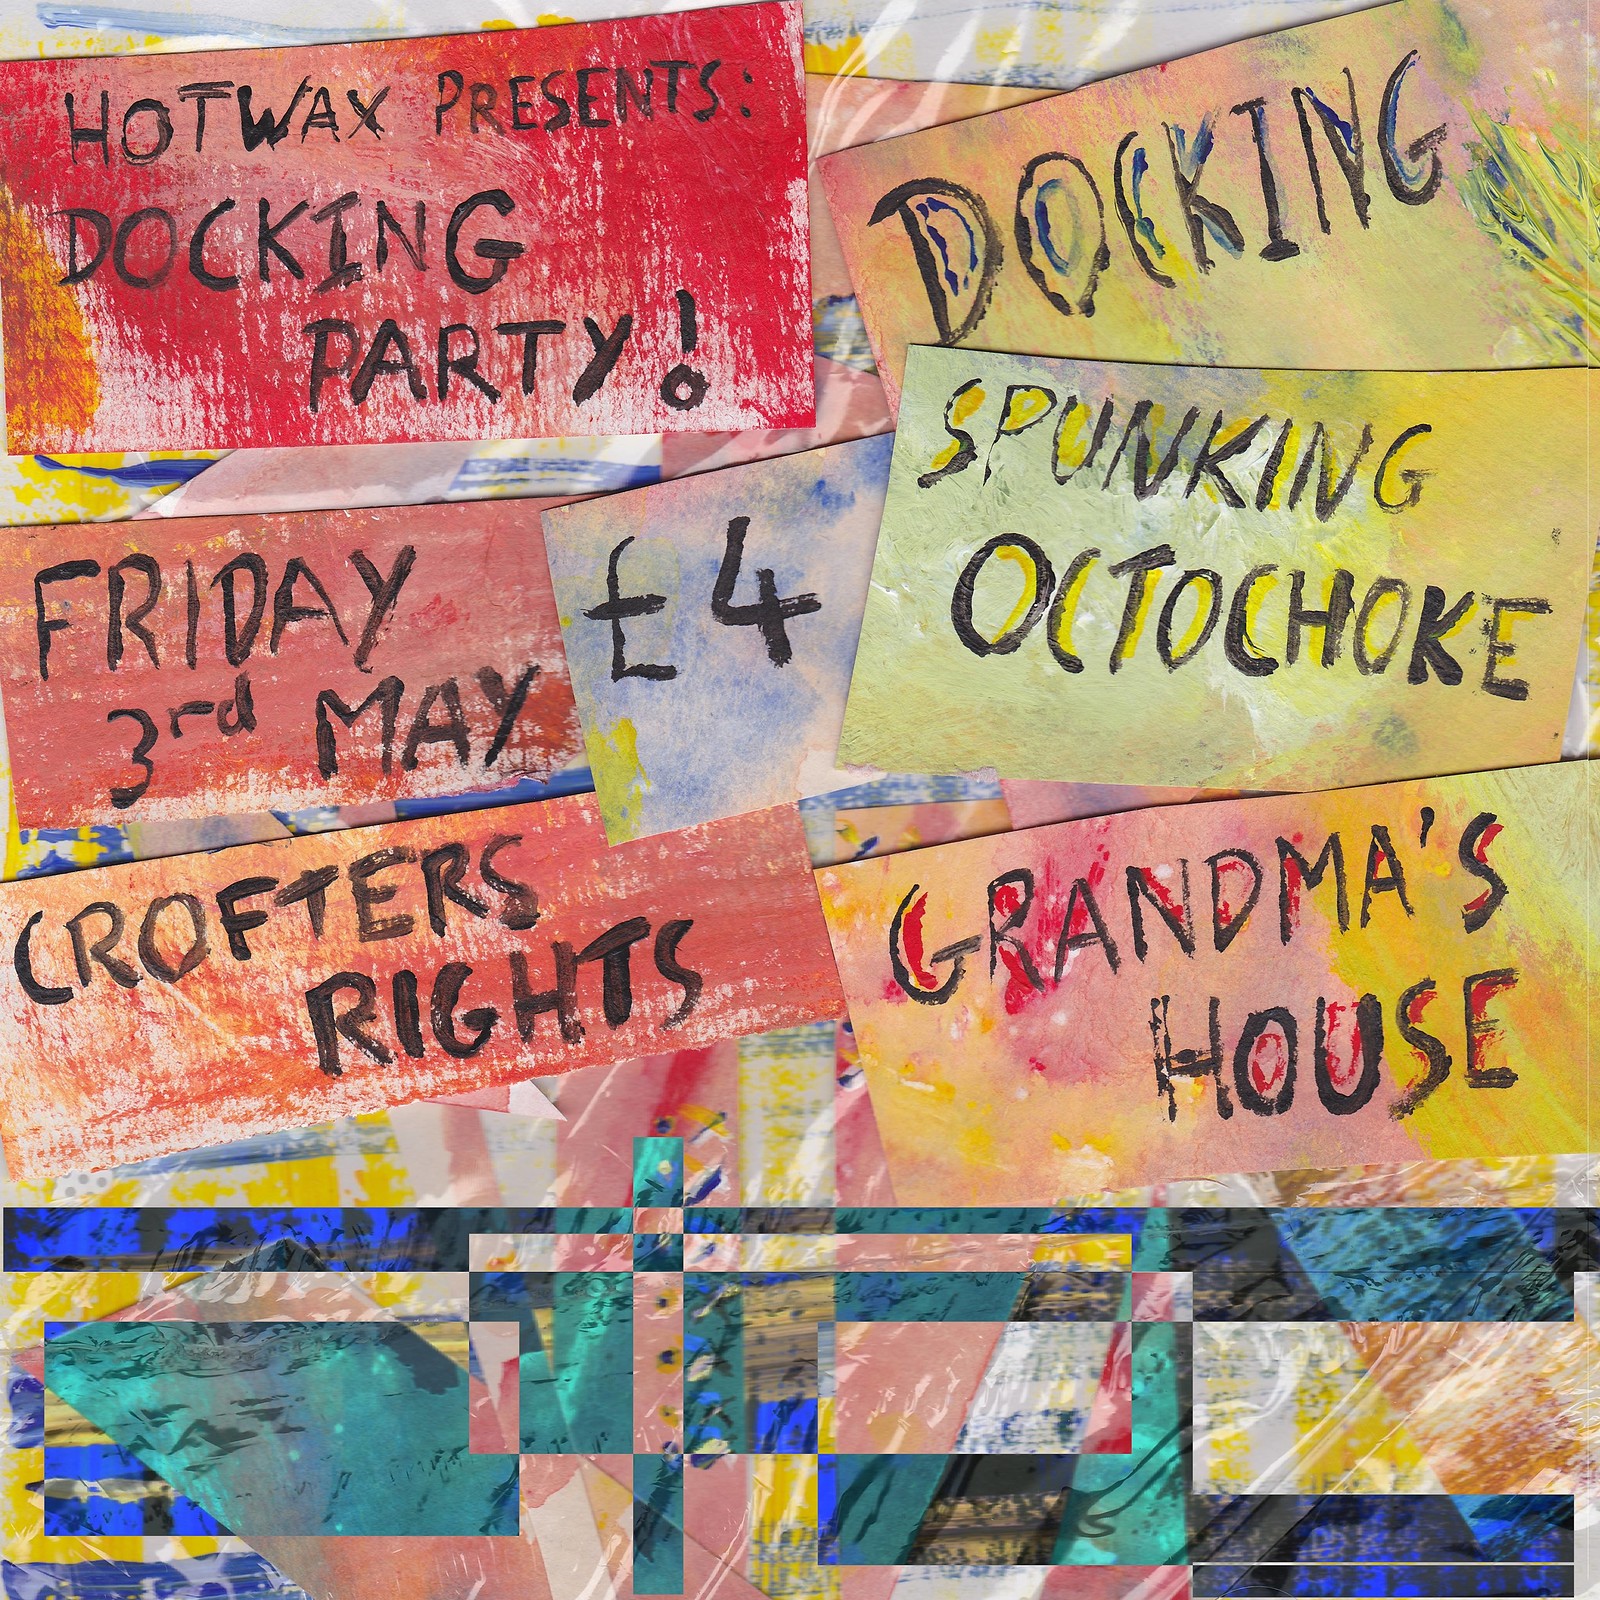 Docking Party Spunking Octochoke + Grandmas House at Crofters Rights